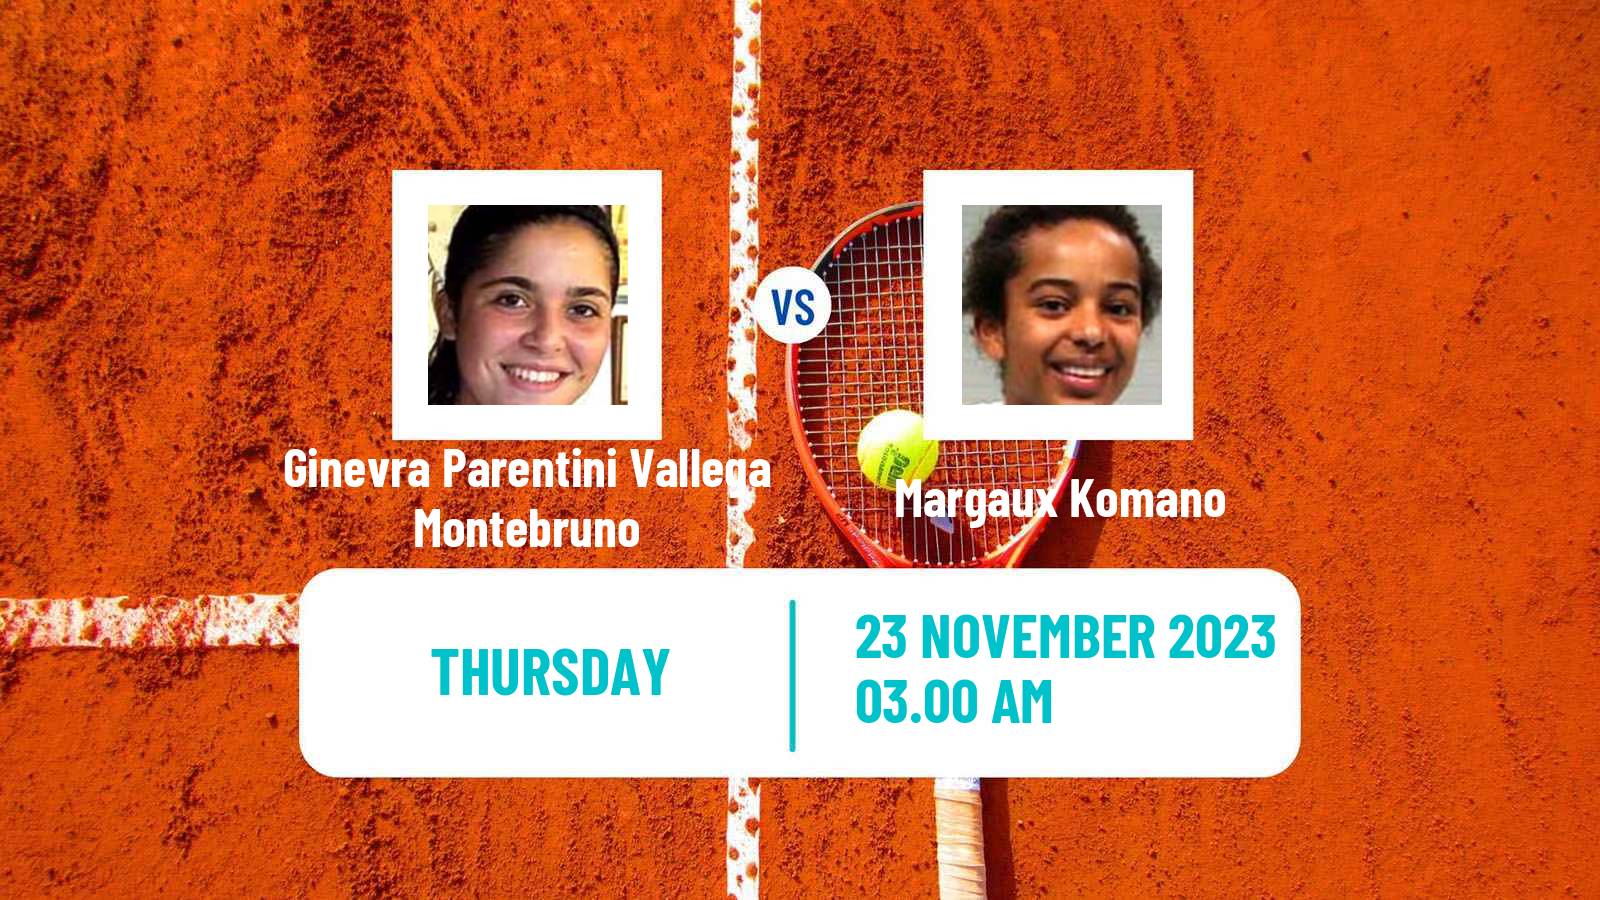 Tennis ITF W15 Heraklion 4 Women Ginevra Parentini Vallega Montebruno - Margaux Komano